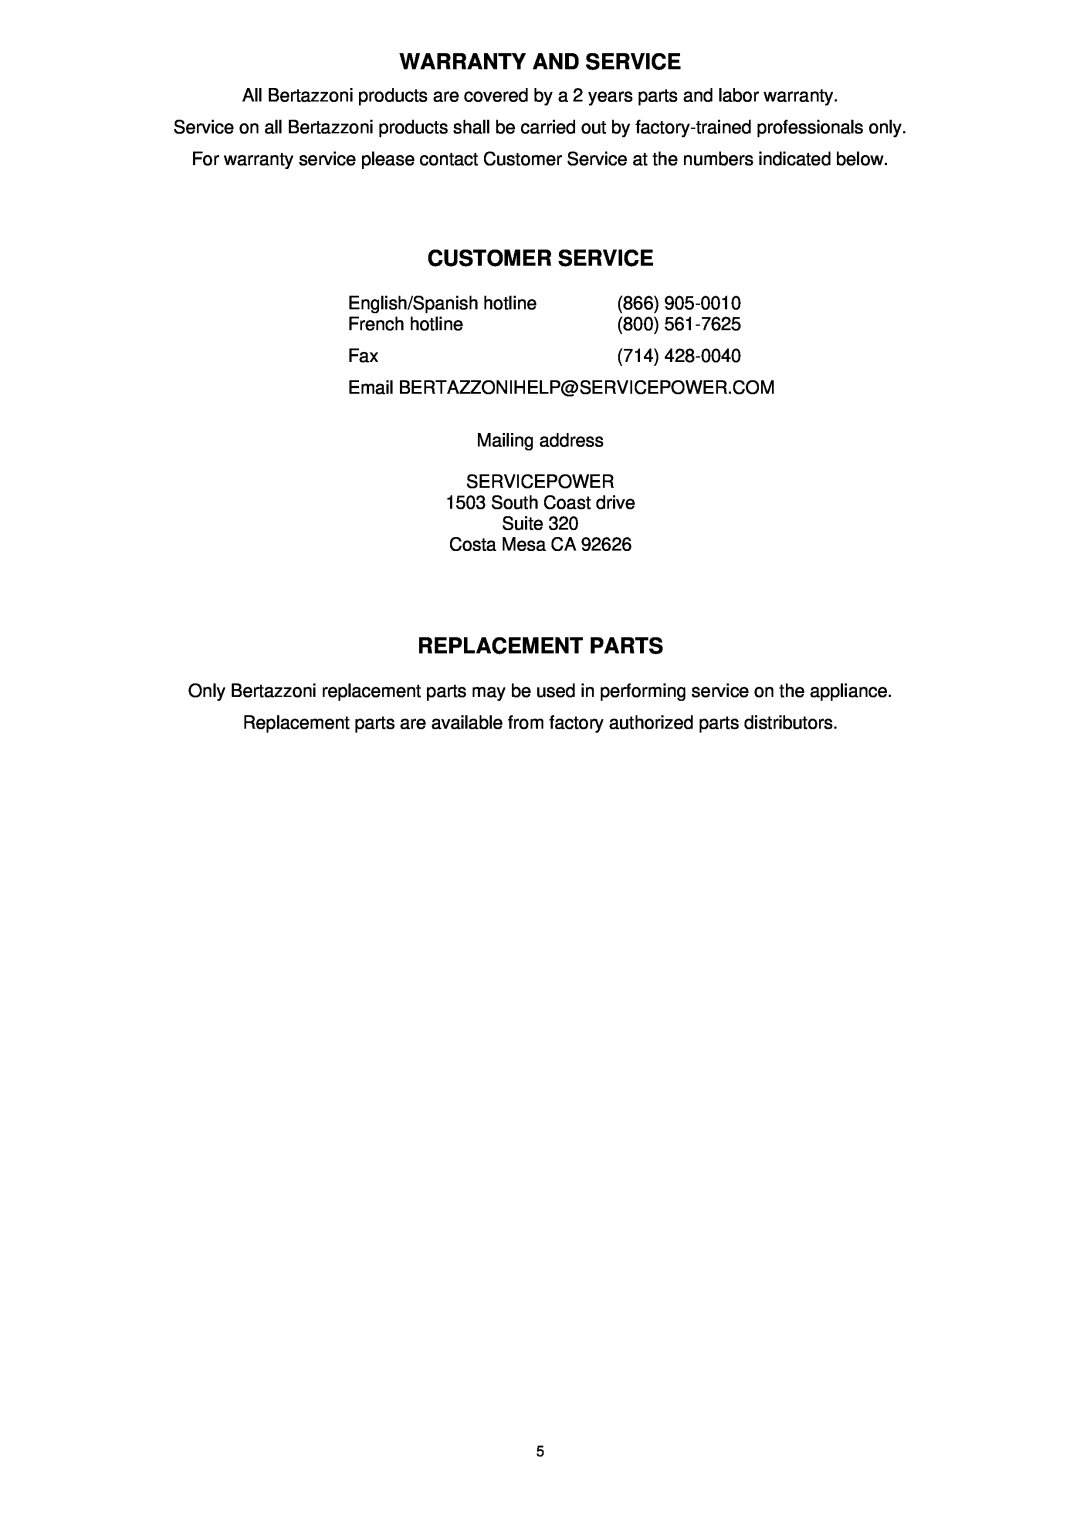 Bertazzoni F30PROXV manual Warranty And Service, Customer Service, Replacement Parts 